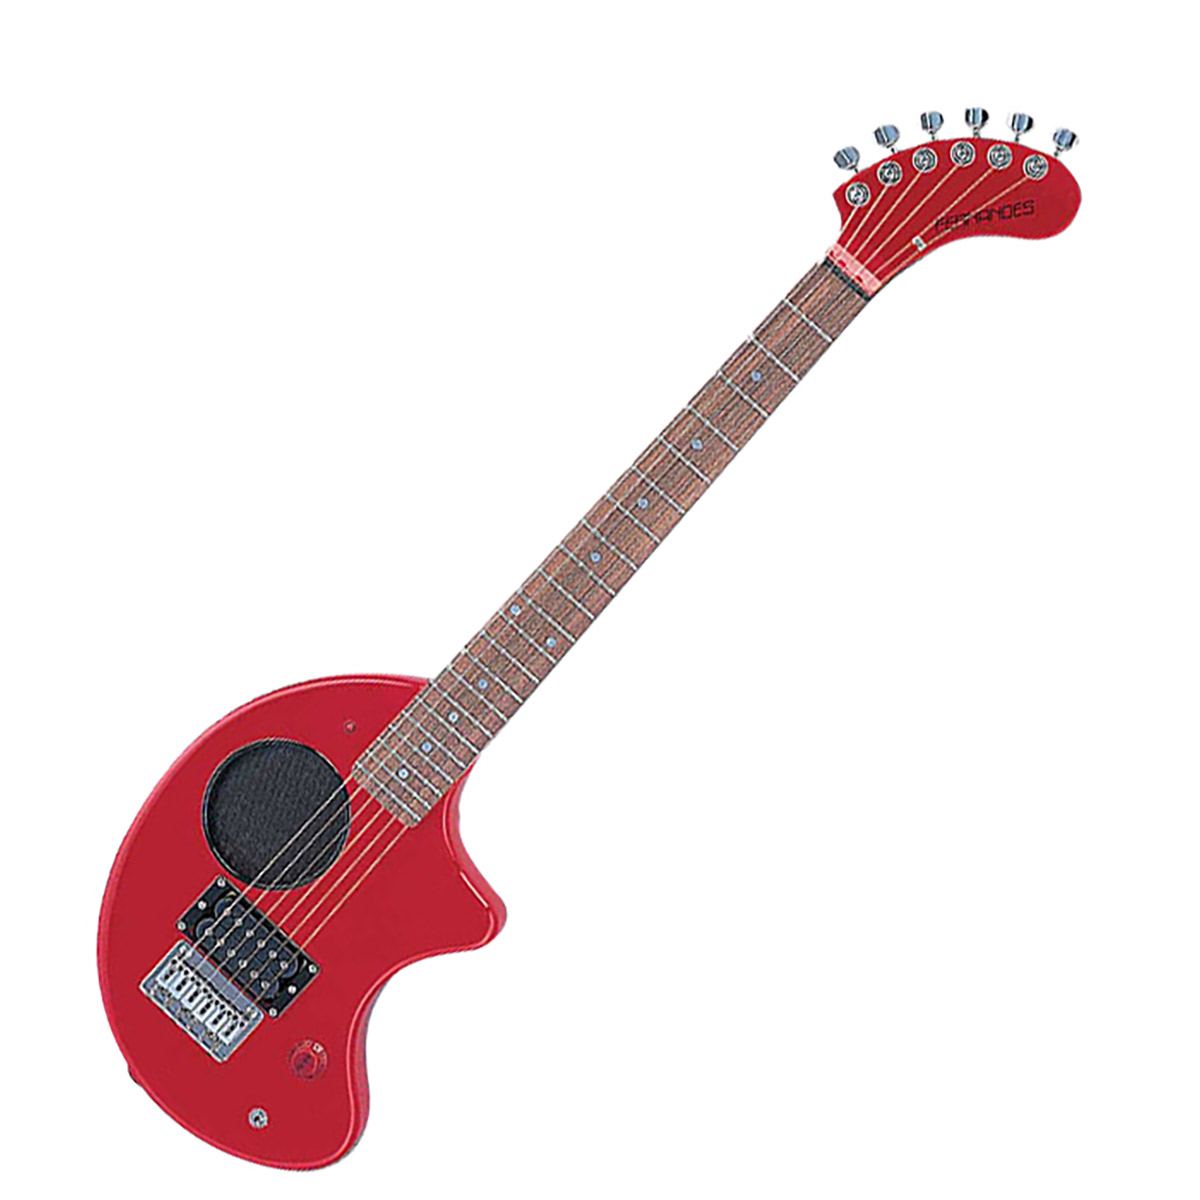 FERNANDES フェルナンデス ZO-3 RED スピーカー内蔵ミニエレキギター レッド ソフトケース付き ゾウさんギター